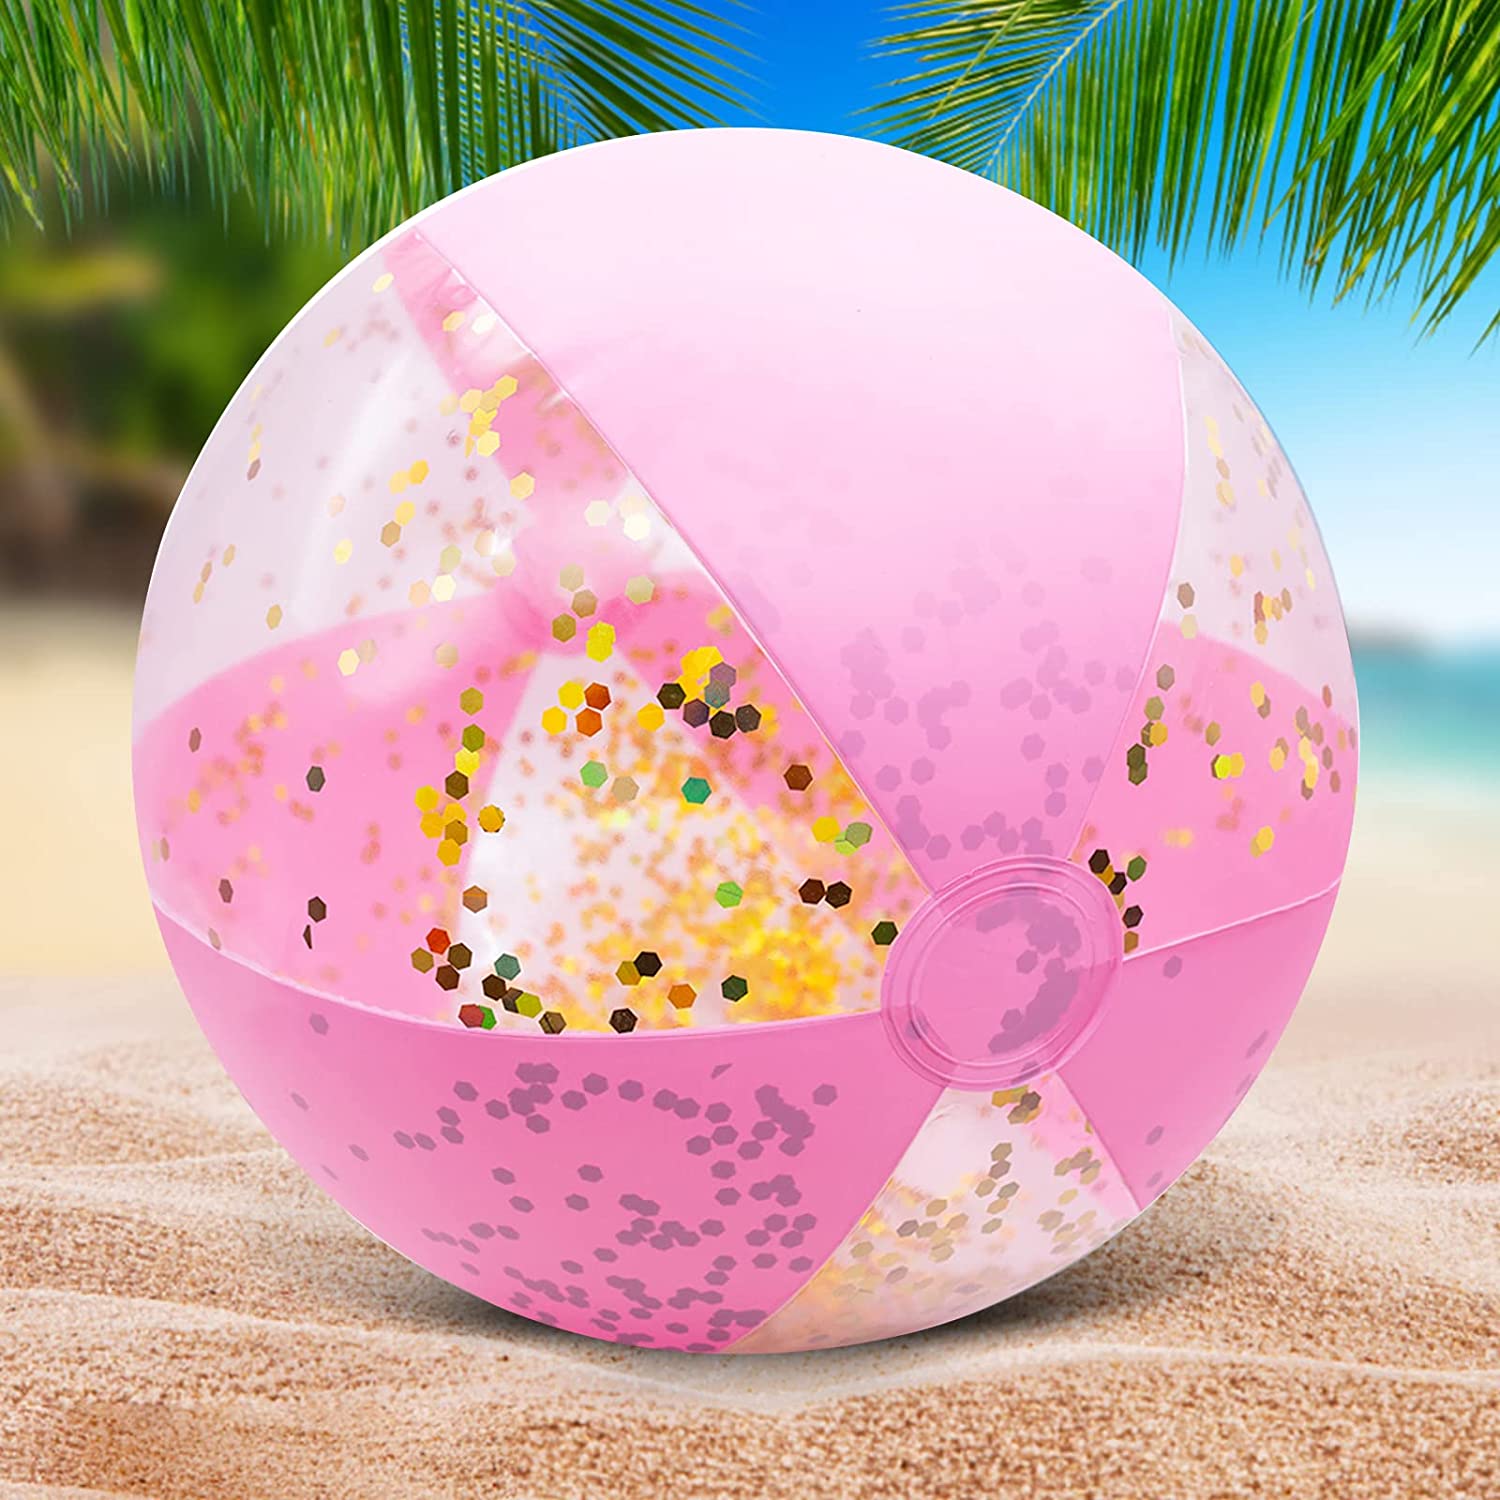 DomeStar Confetti Filled Pink Beach Ball